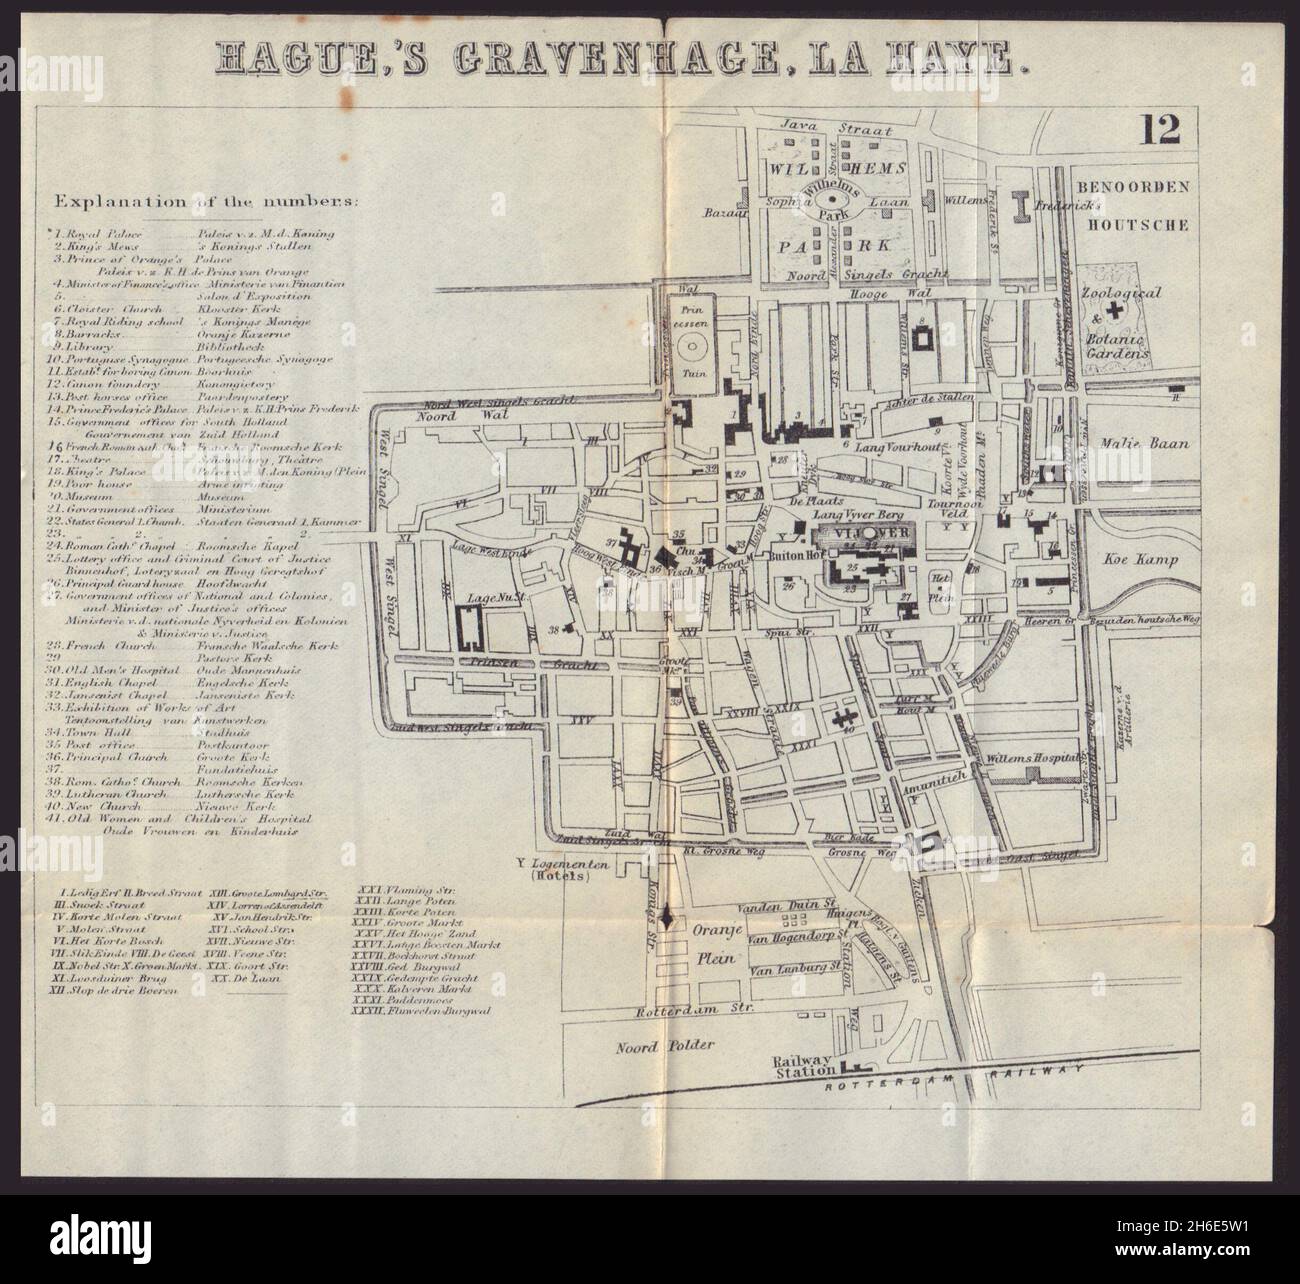 LA HAYA DEN HAAG 'S-GRAVENHAGE LA HAYE. Plano de la ciudad mapa de la ciudad. BRADSHAW 1892 Foto de stock